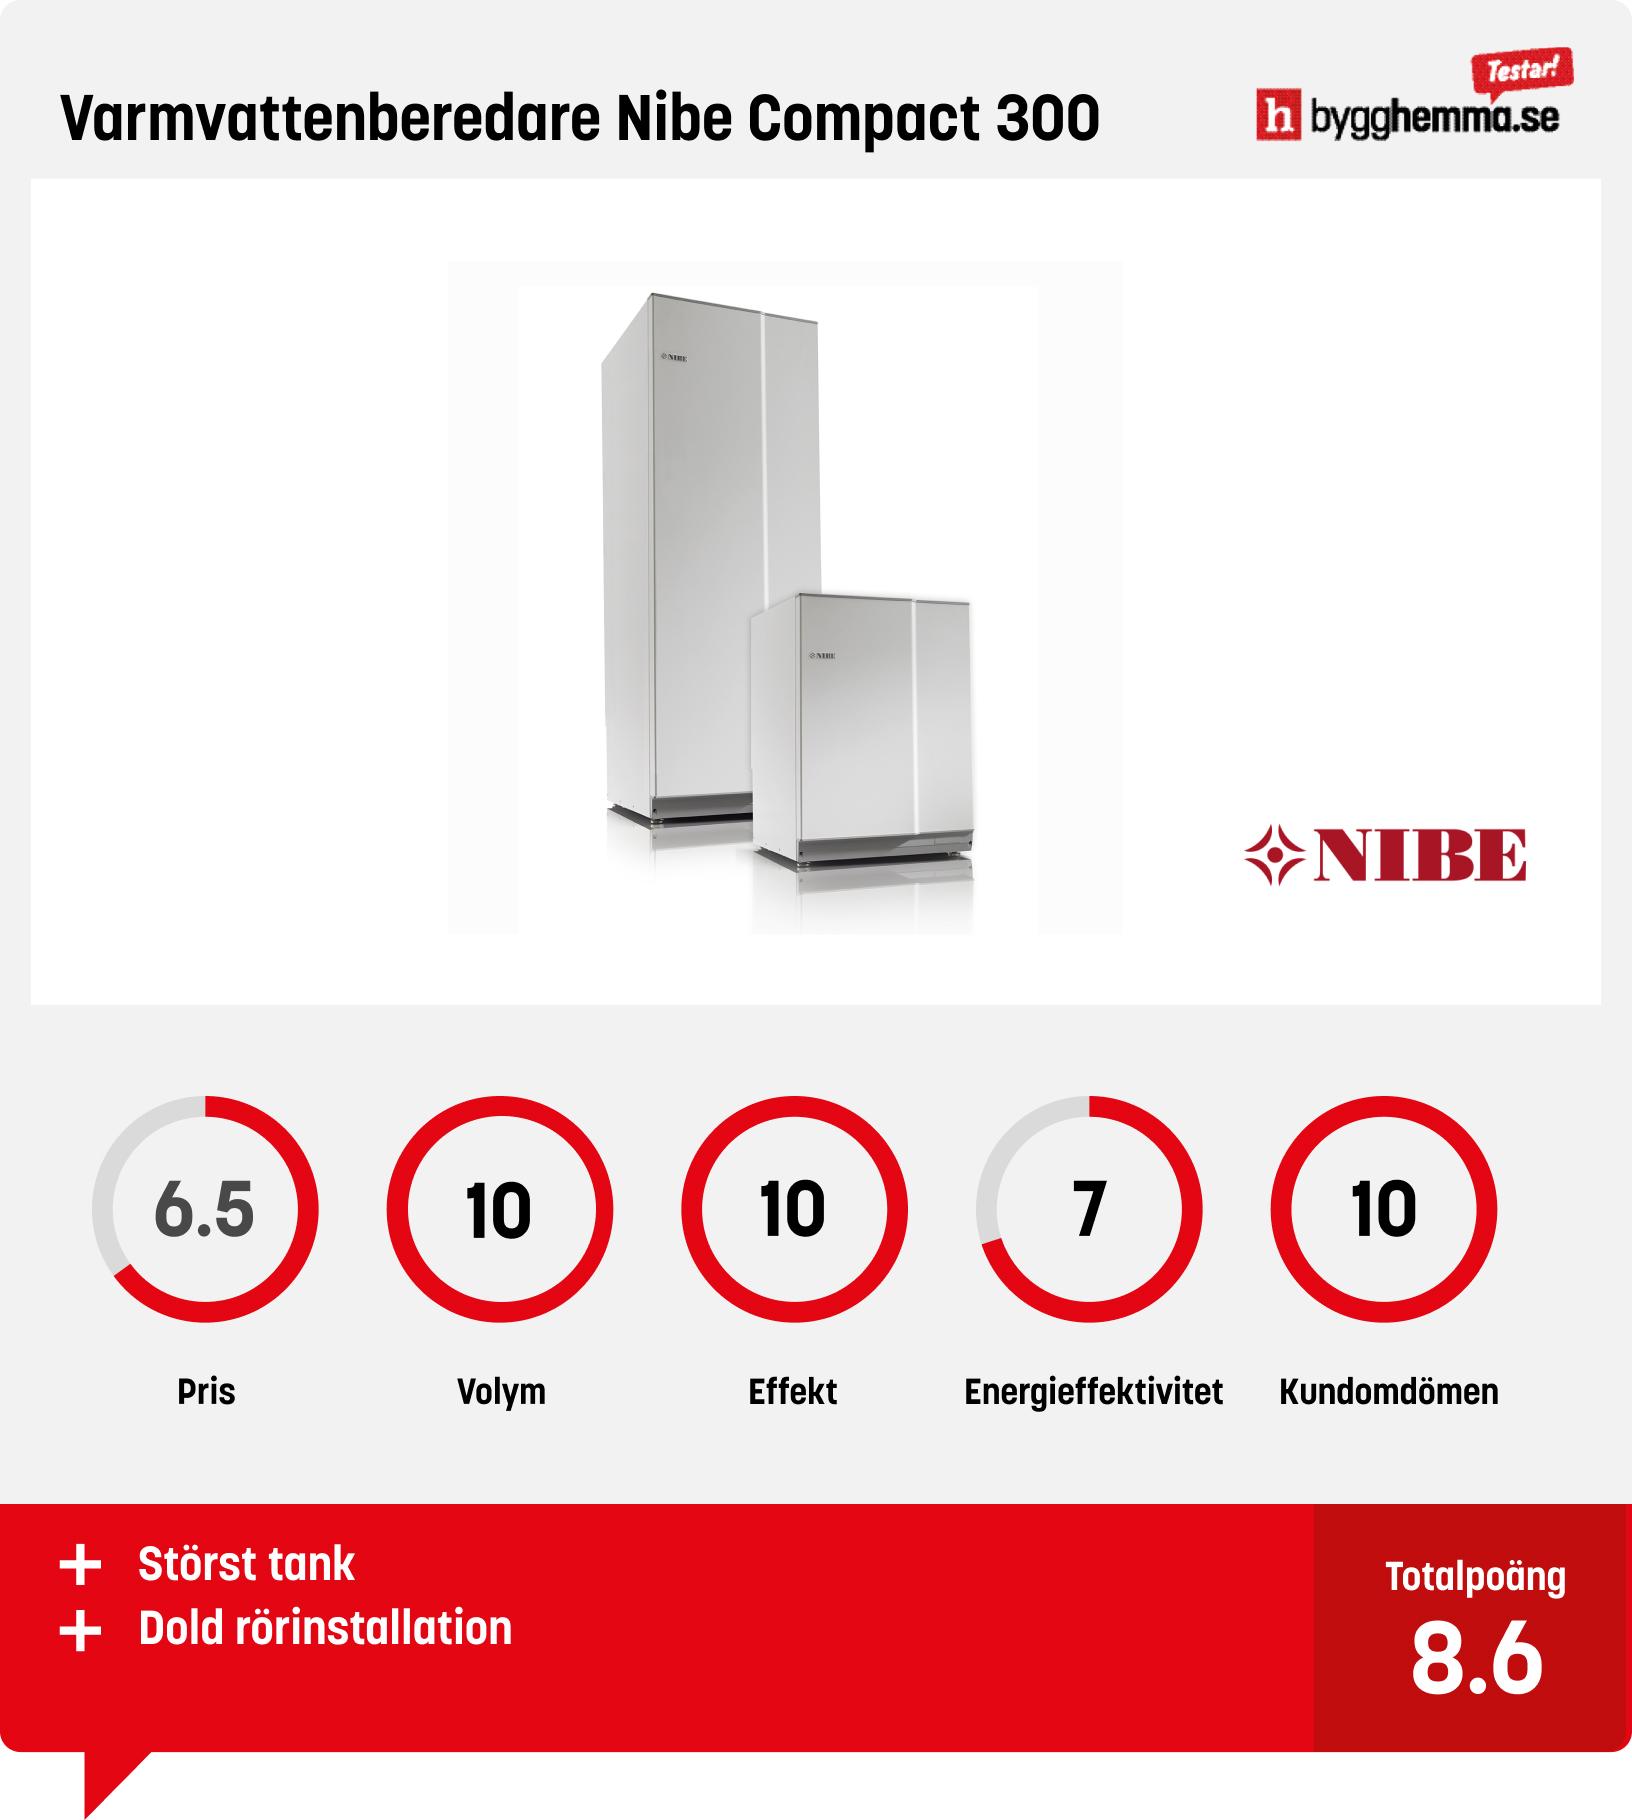 Varmvattenberedare bäst i test - Varmvattenberedare Nibe Compact 300